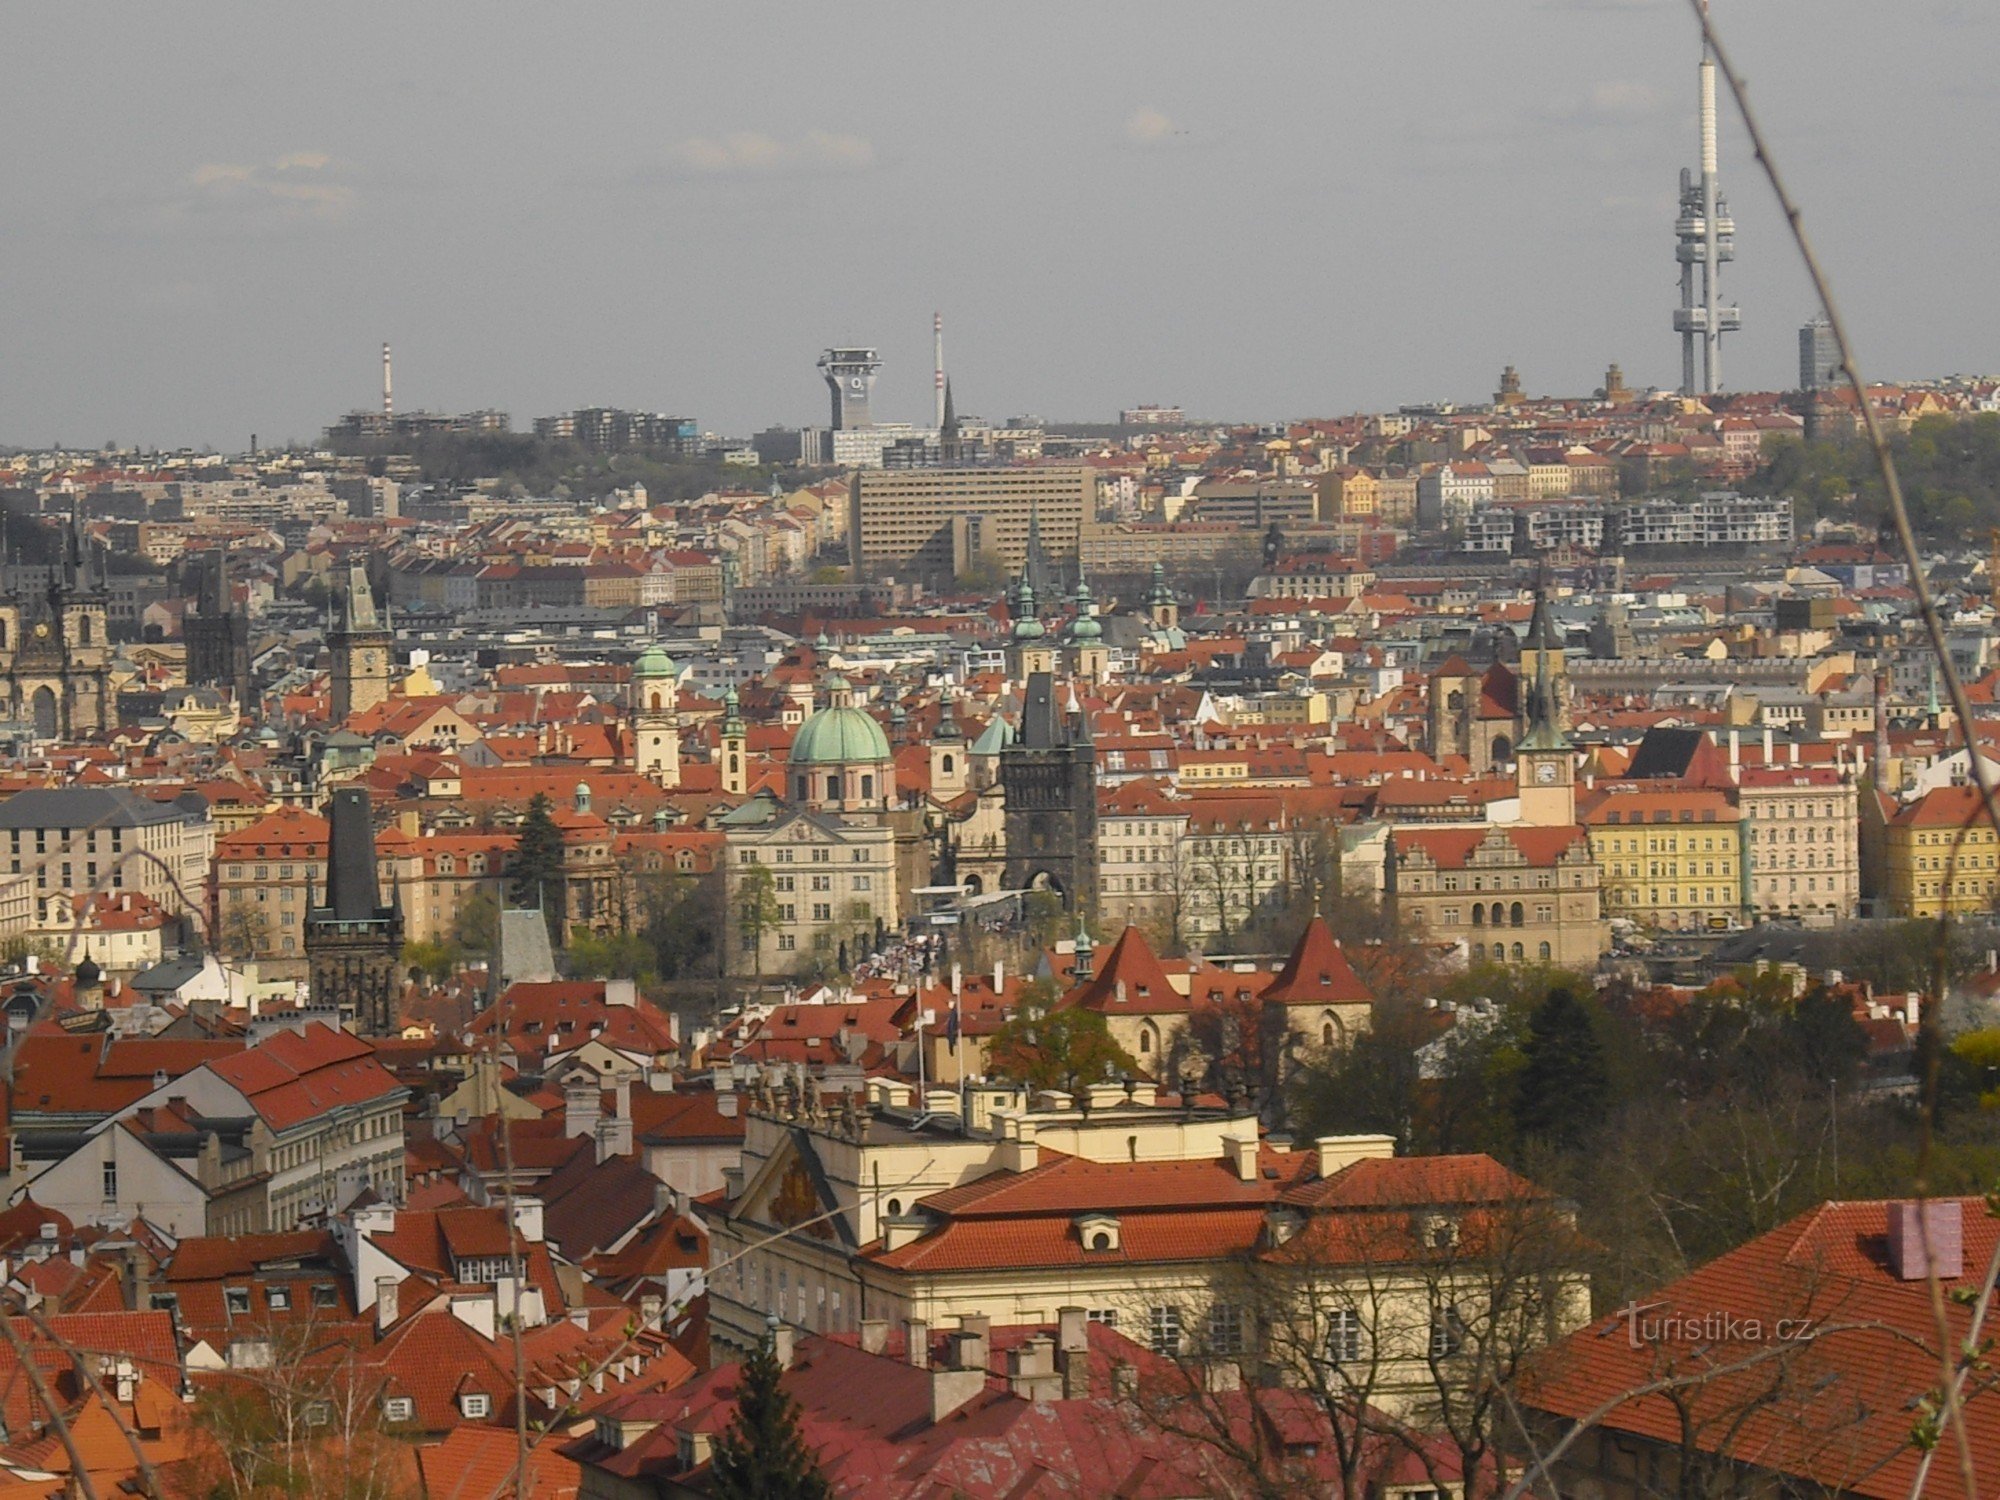 Capital City of Prague